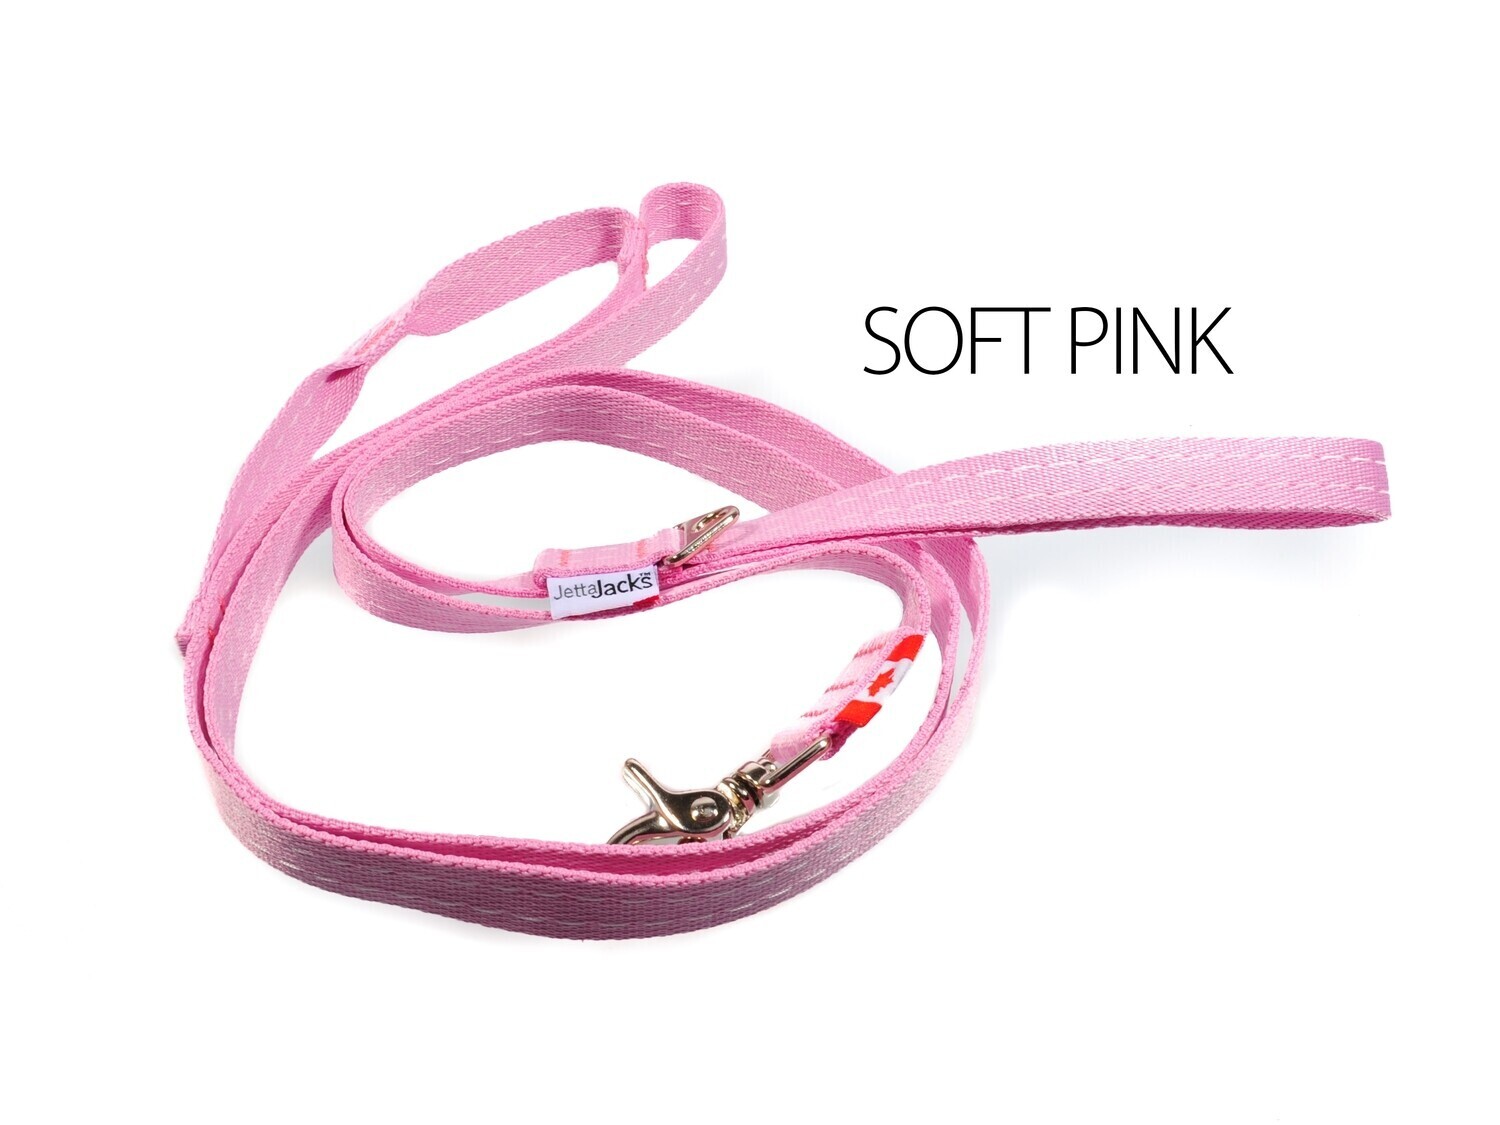 JettaJacks Soft Pink 6' Double-Handled Leash